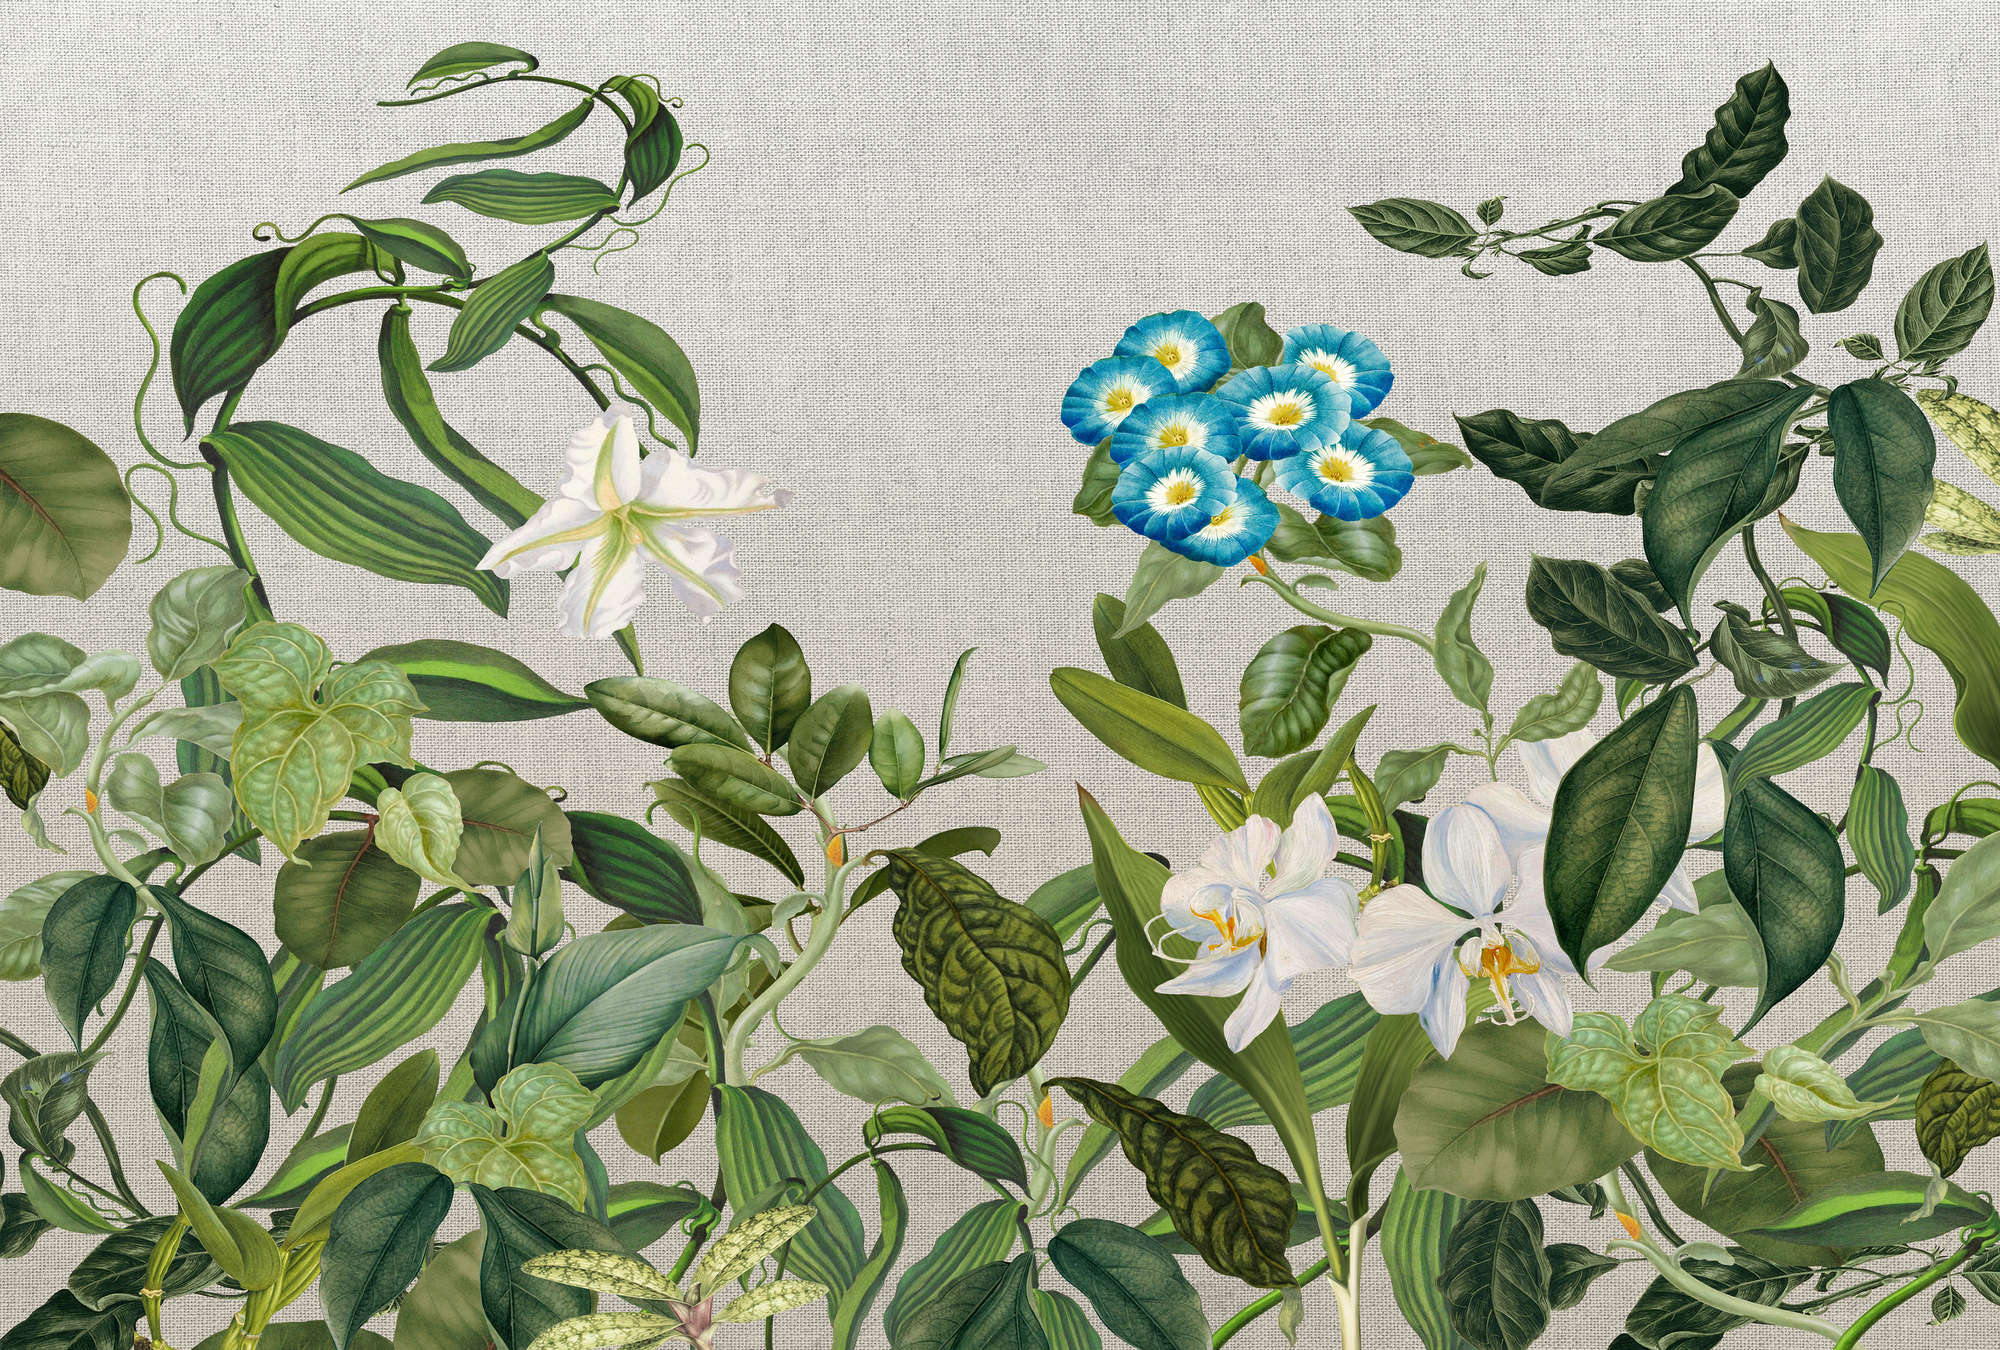             Papier peint avec fleurs, feuilles & look textile - vert, gris, bleu
        